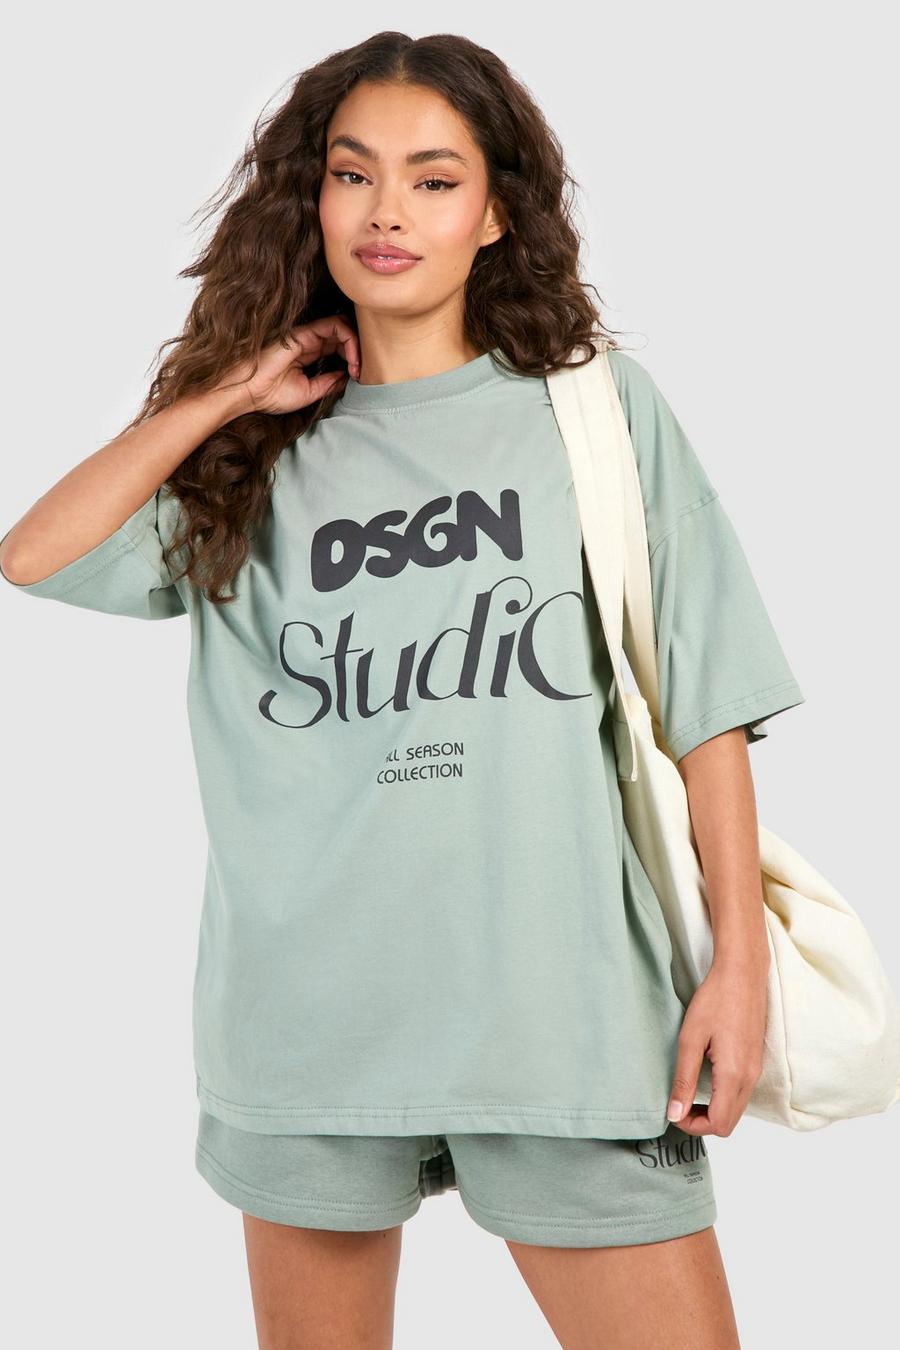 Ensemble oversize à slogan Dsgn Studio, Washed khaki